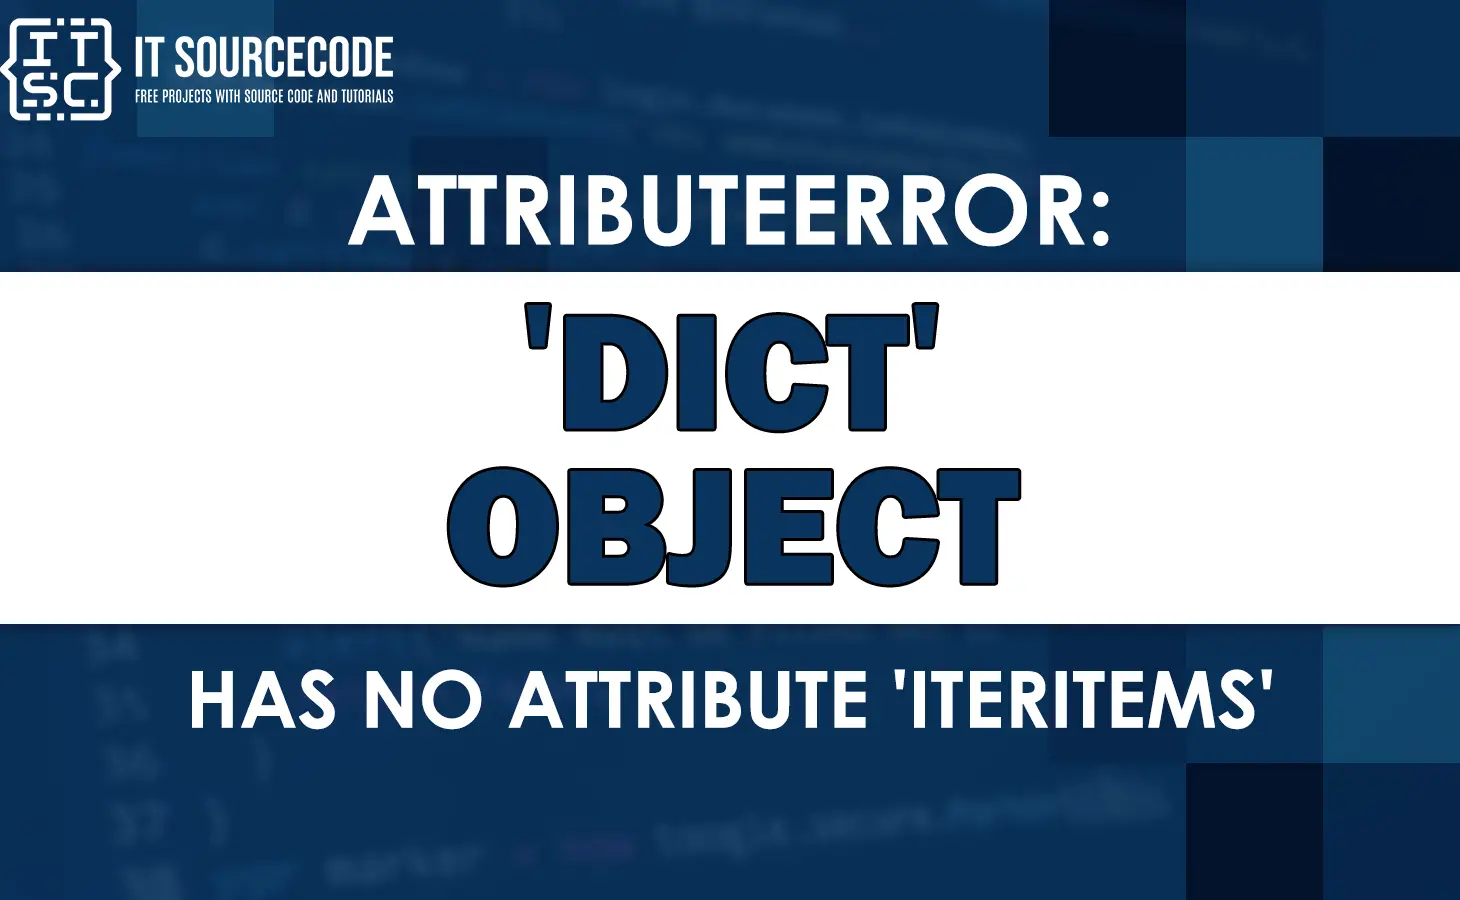 Attributeerror: dict object has no attribute iteritems